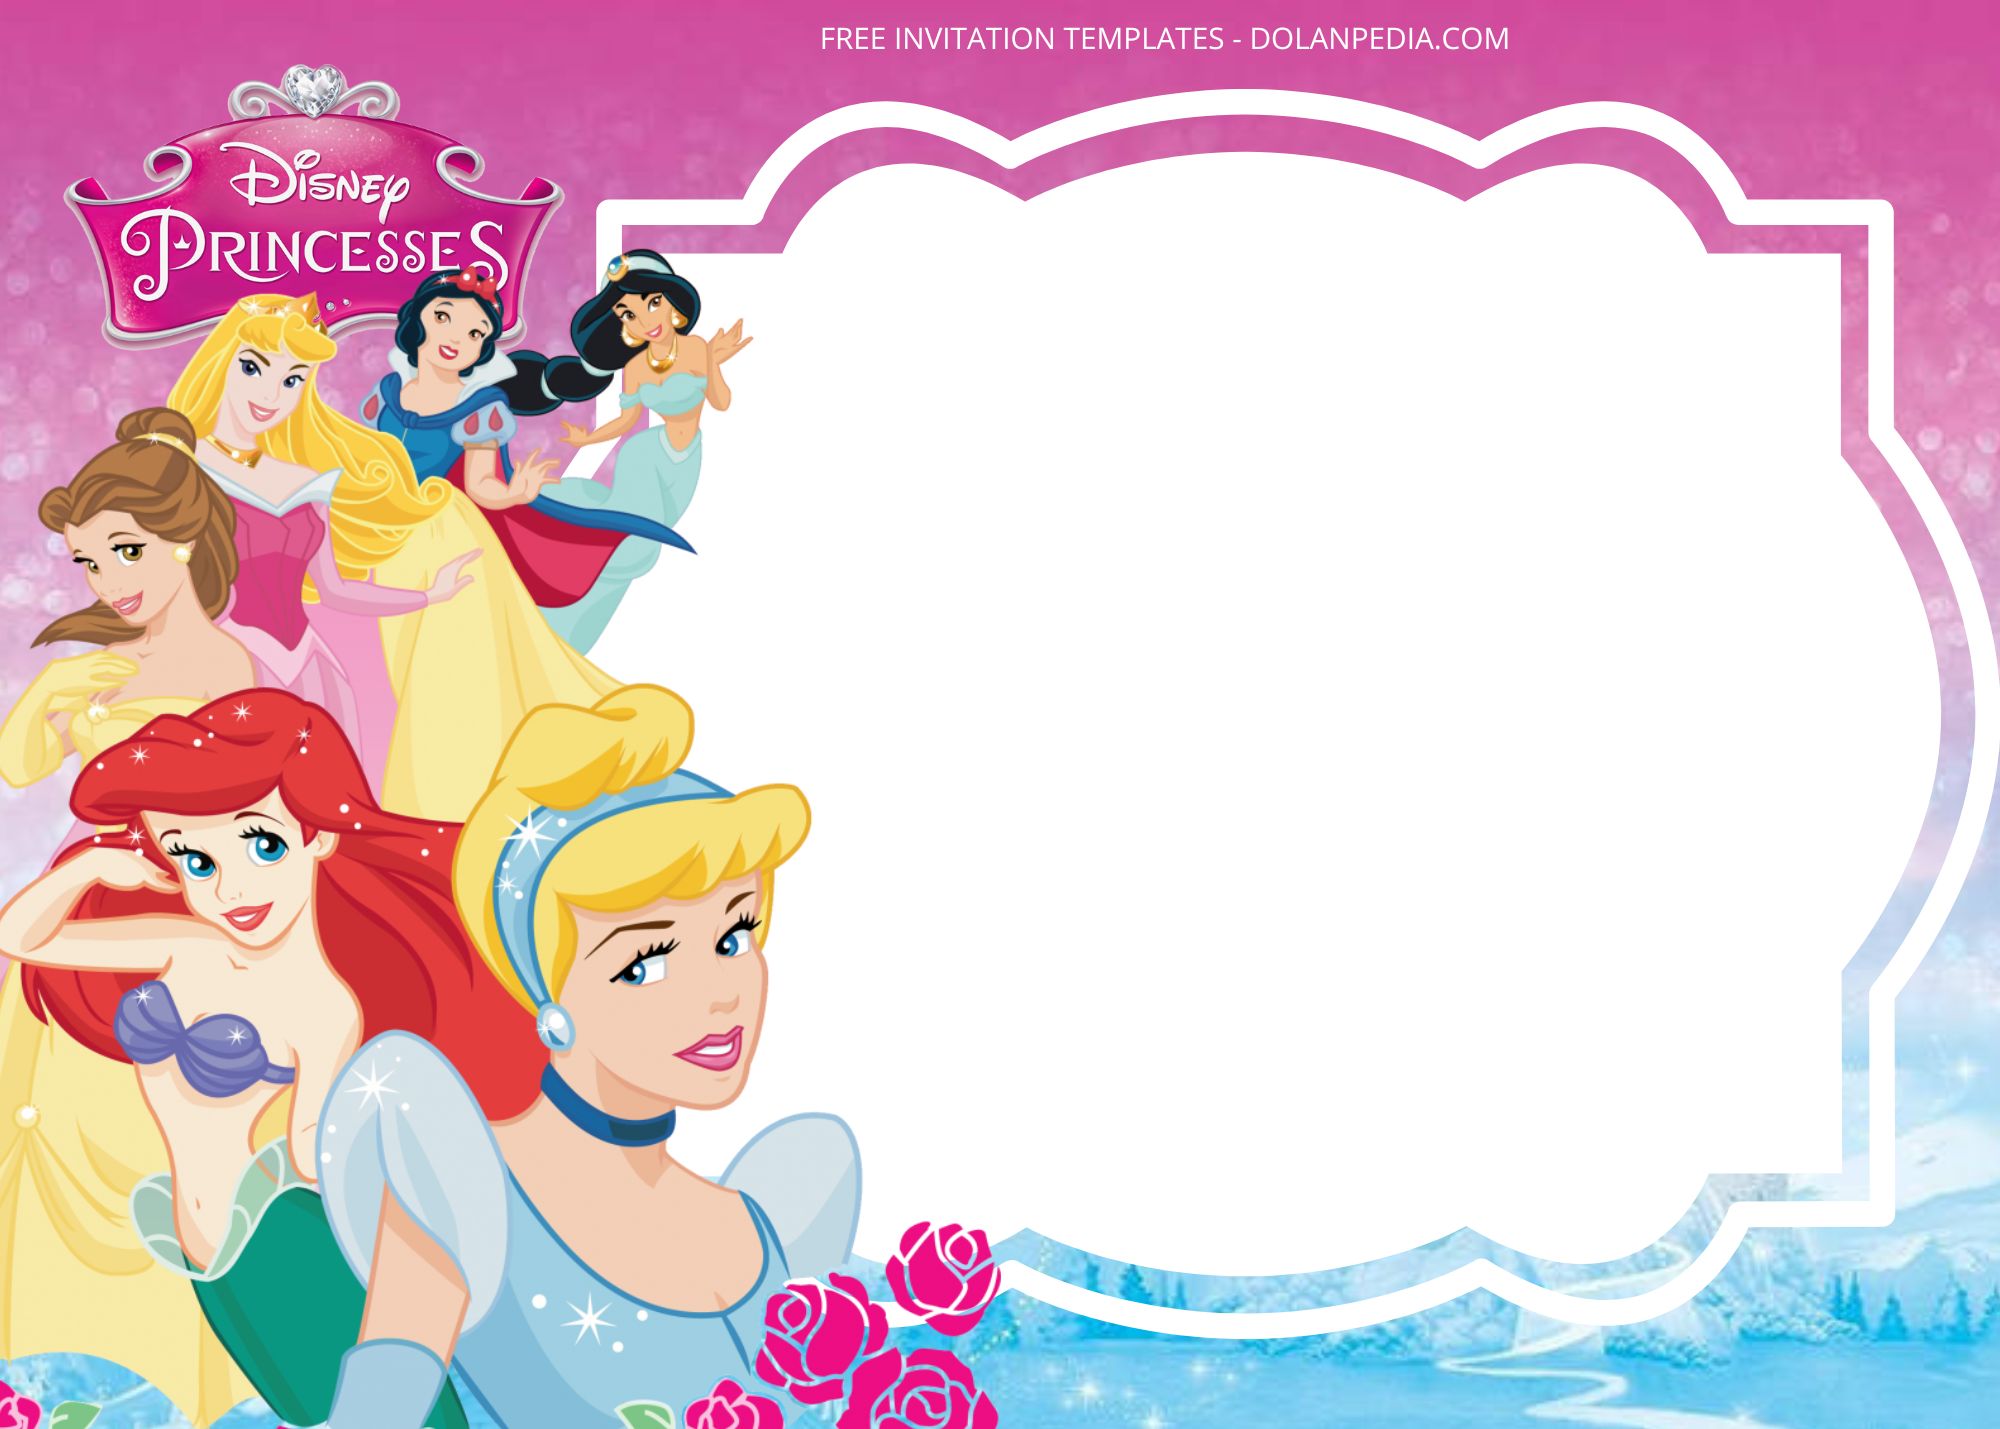 Blank Disney Princess Birthday Invitation Templates Four